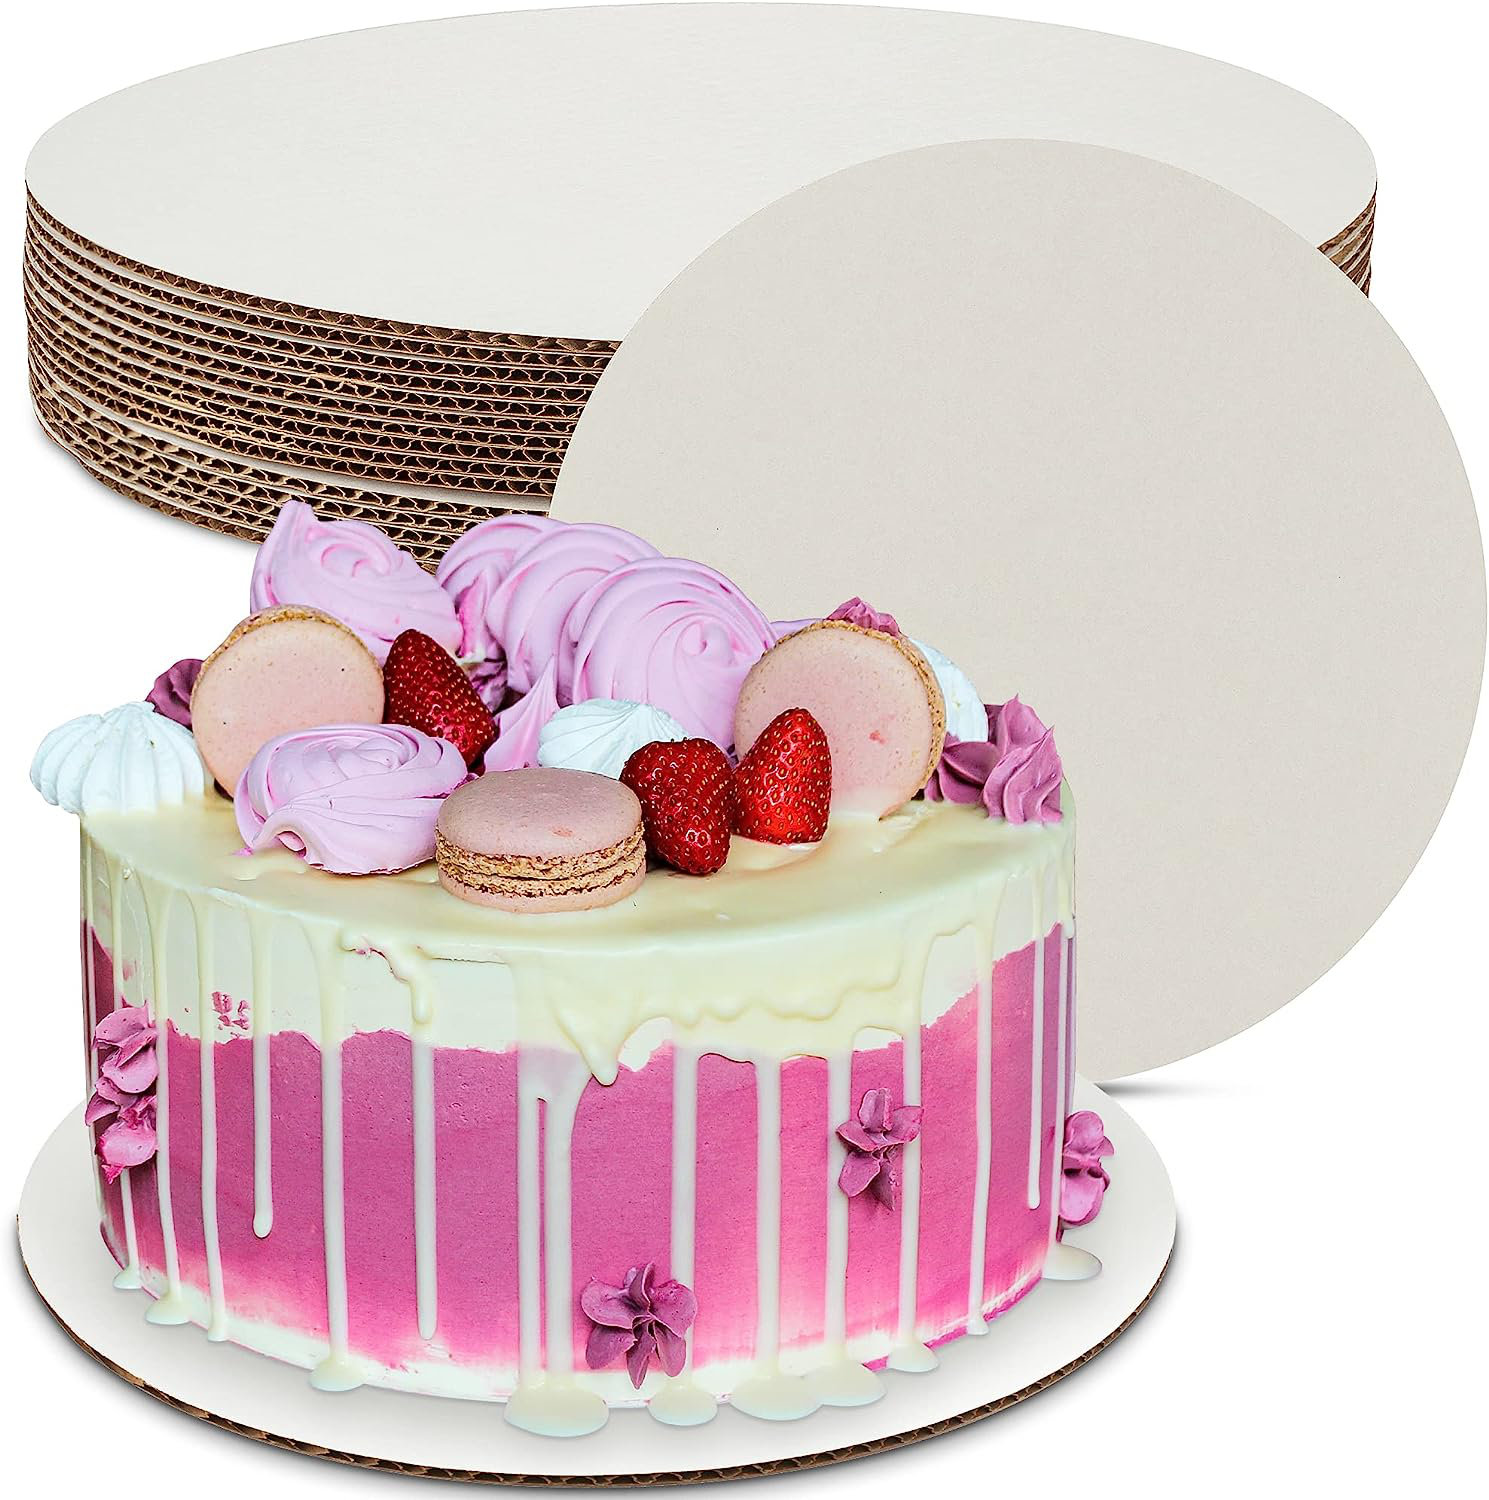 Cake Board, 14, White, Cardboard, Circle, 6 Pack, Wilton 2104-145